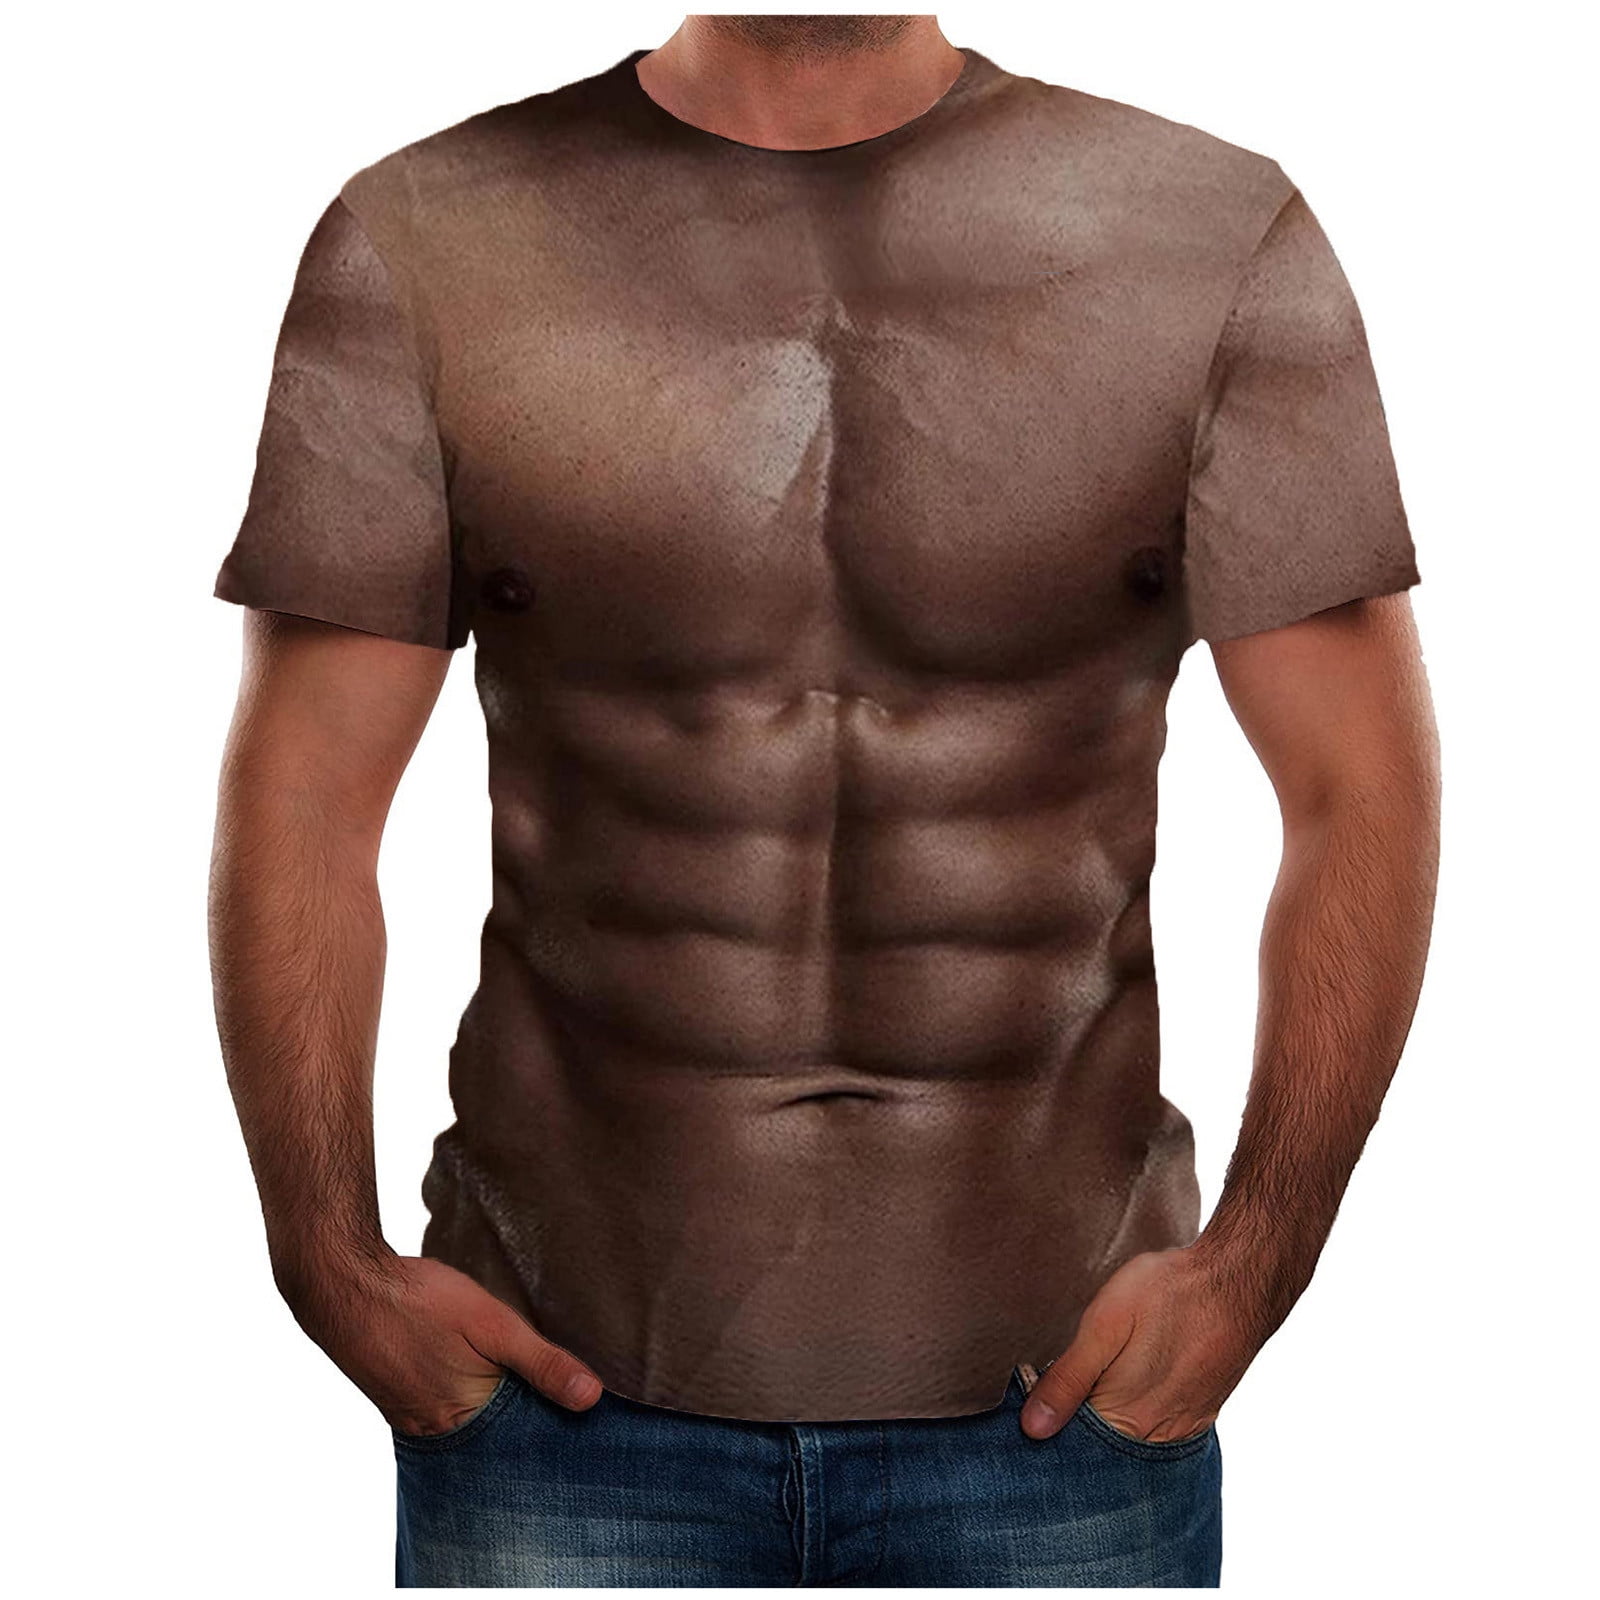 Men Muscle Shirt Funny,Men's Fake Muscle Short Sleeve T-Shirt 3D Printing  Casual Top Novelty Pattern Shirt T-Shirt 